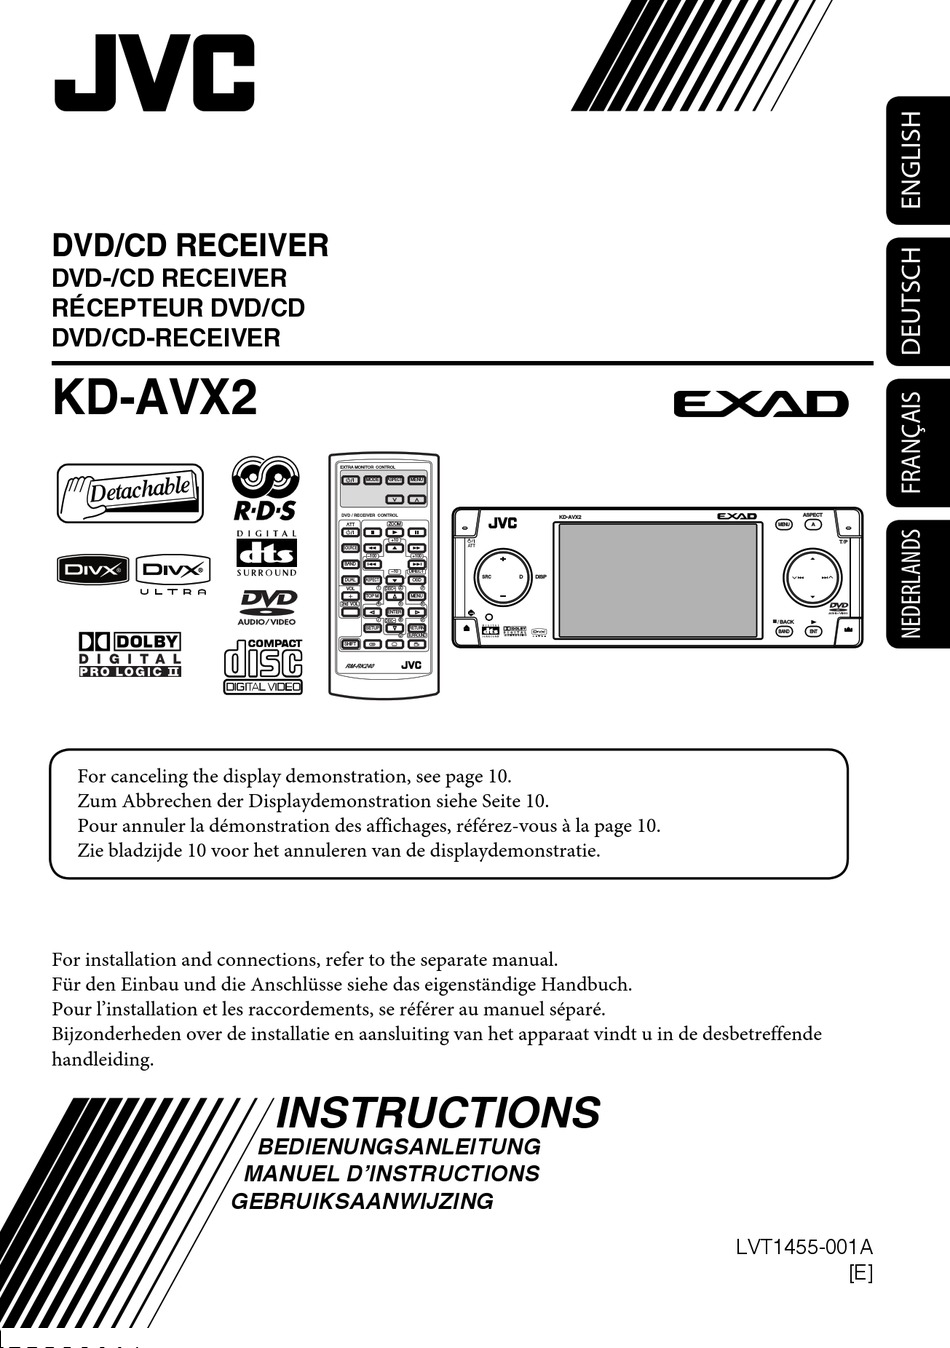 JVC EXAD KD-AVX2 INSTRUCTIONS MANUAL Pdf Download